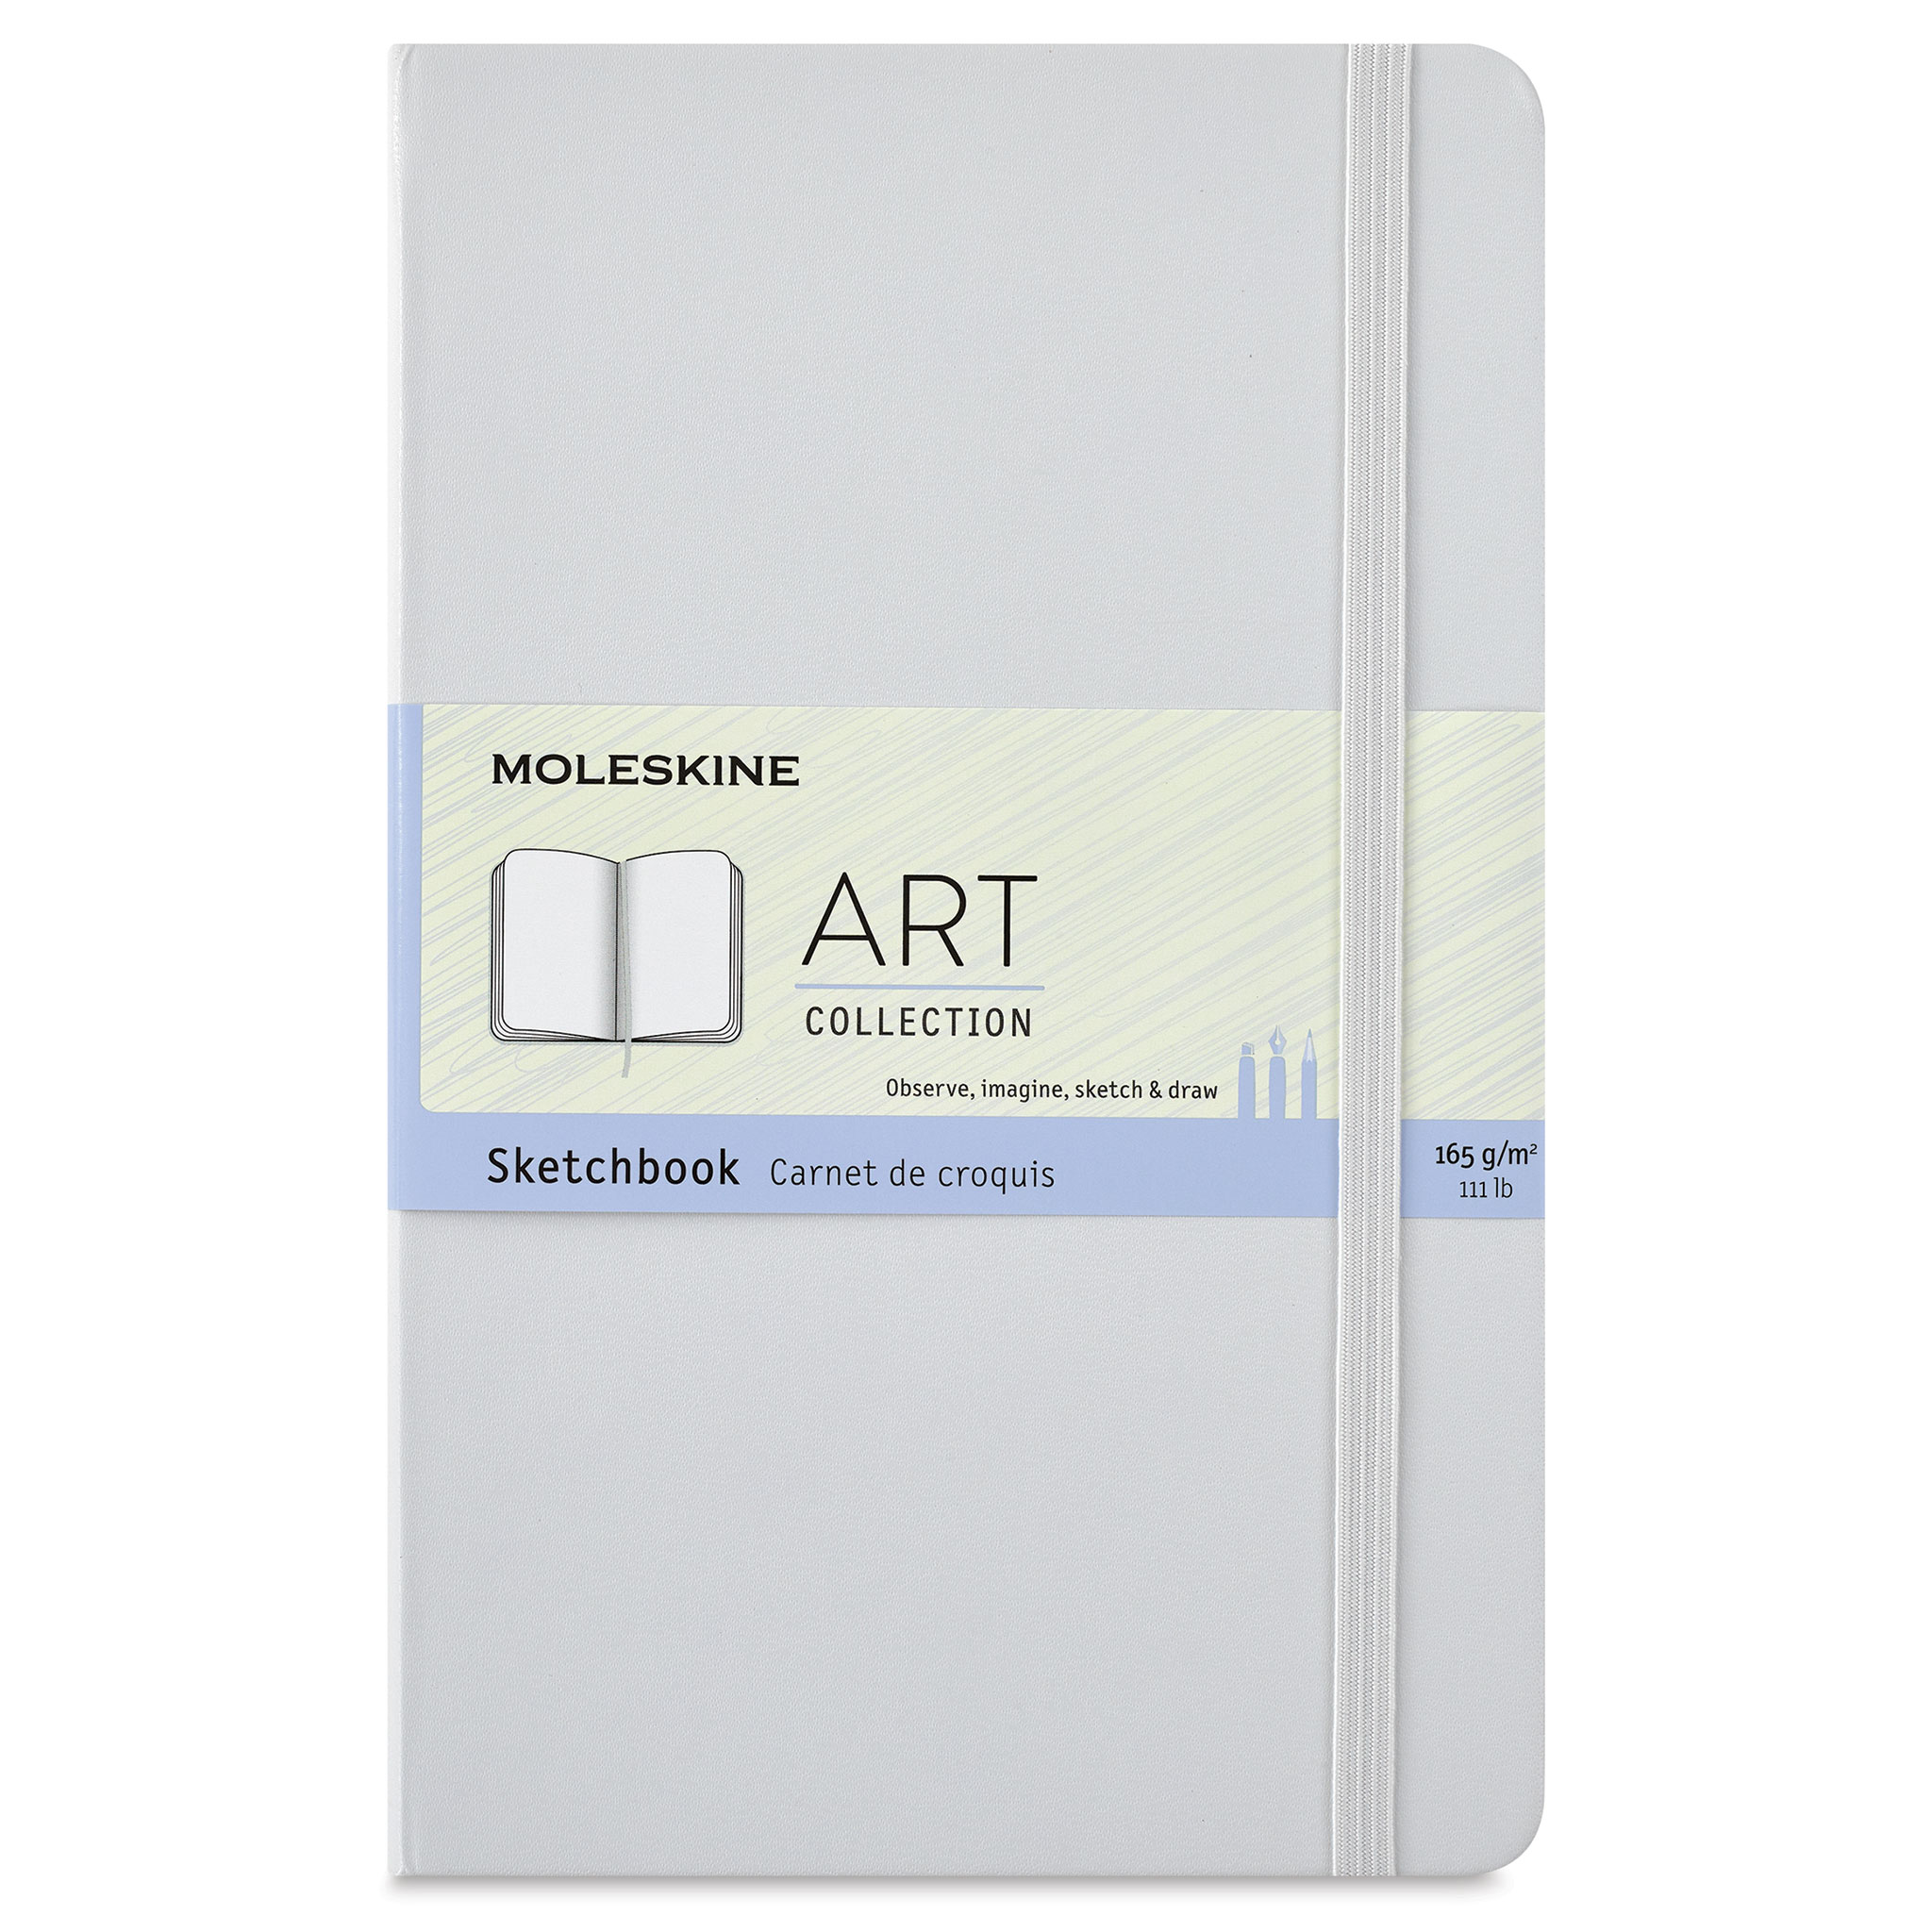 Moleskine Art Collection Sketching Kit Bundle, Paper